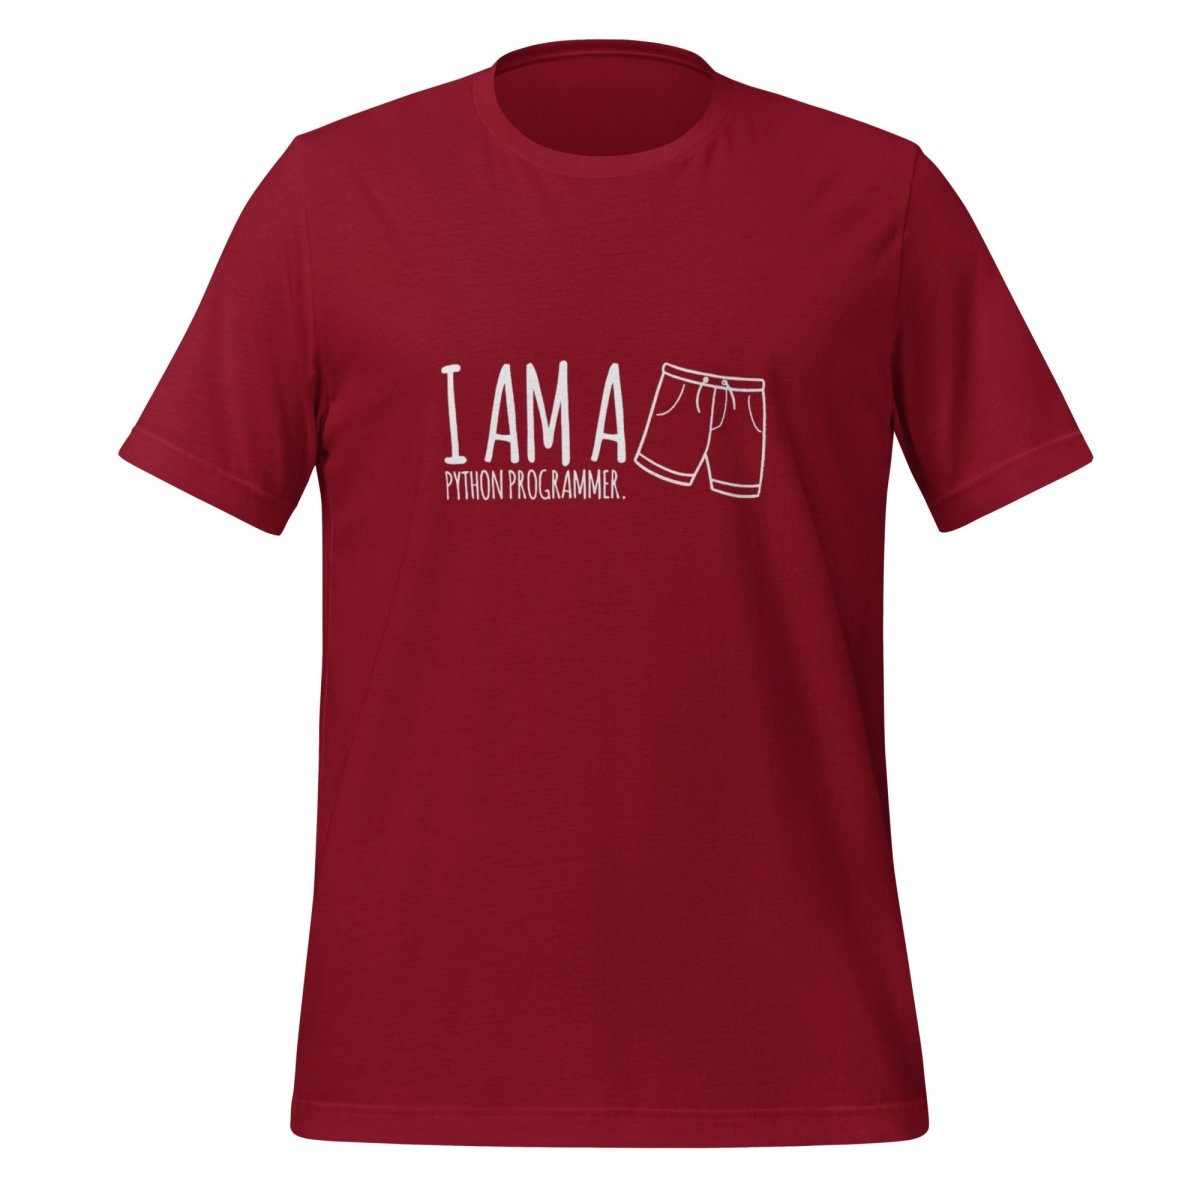 I'm a Python programmer. T - Shirt (unisex) - Cardinal - AI Store